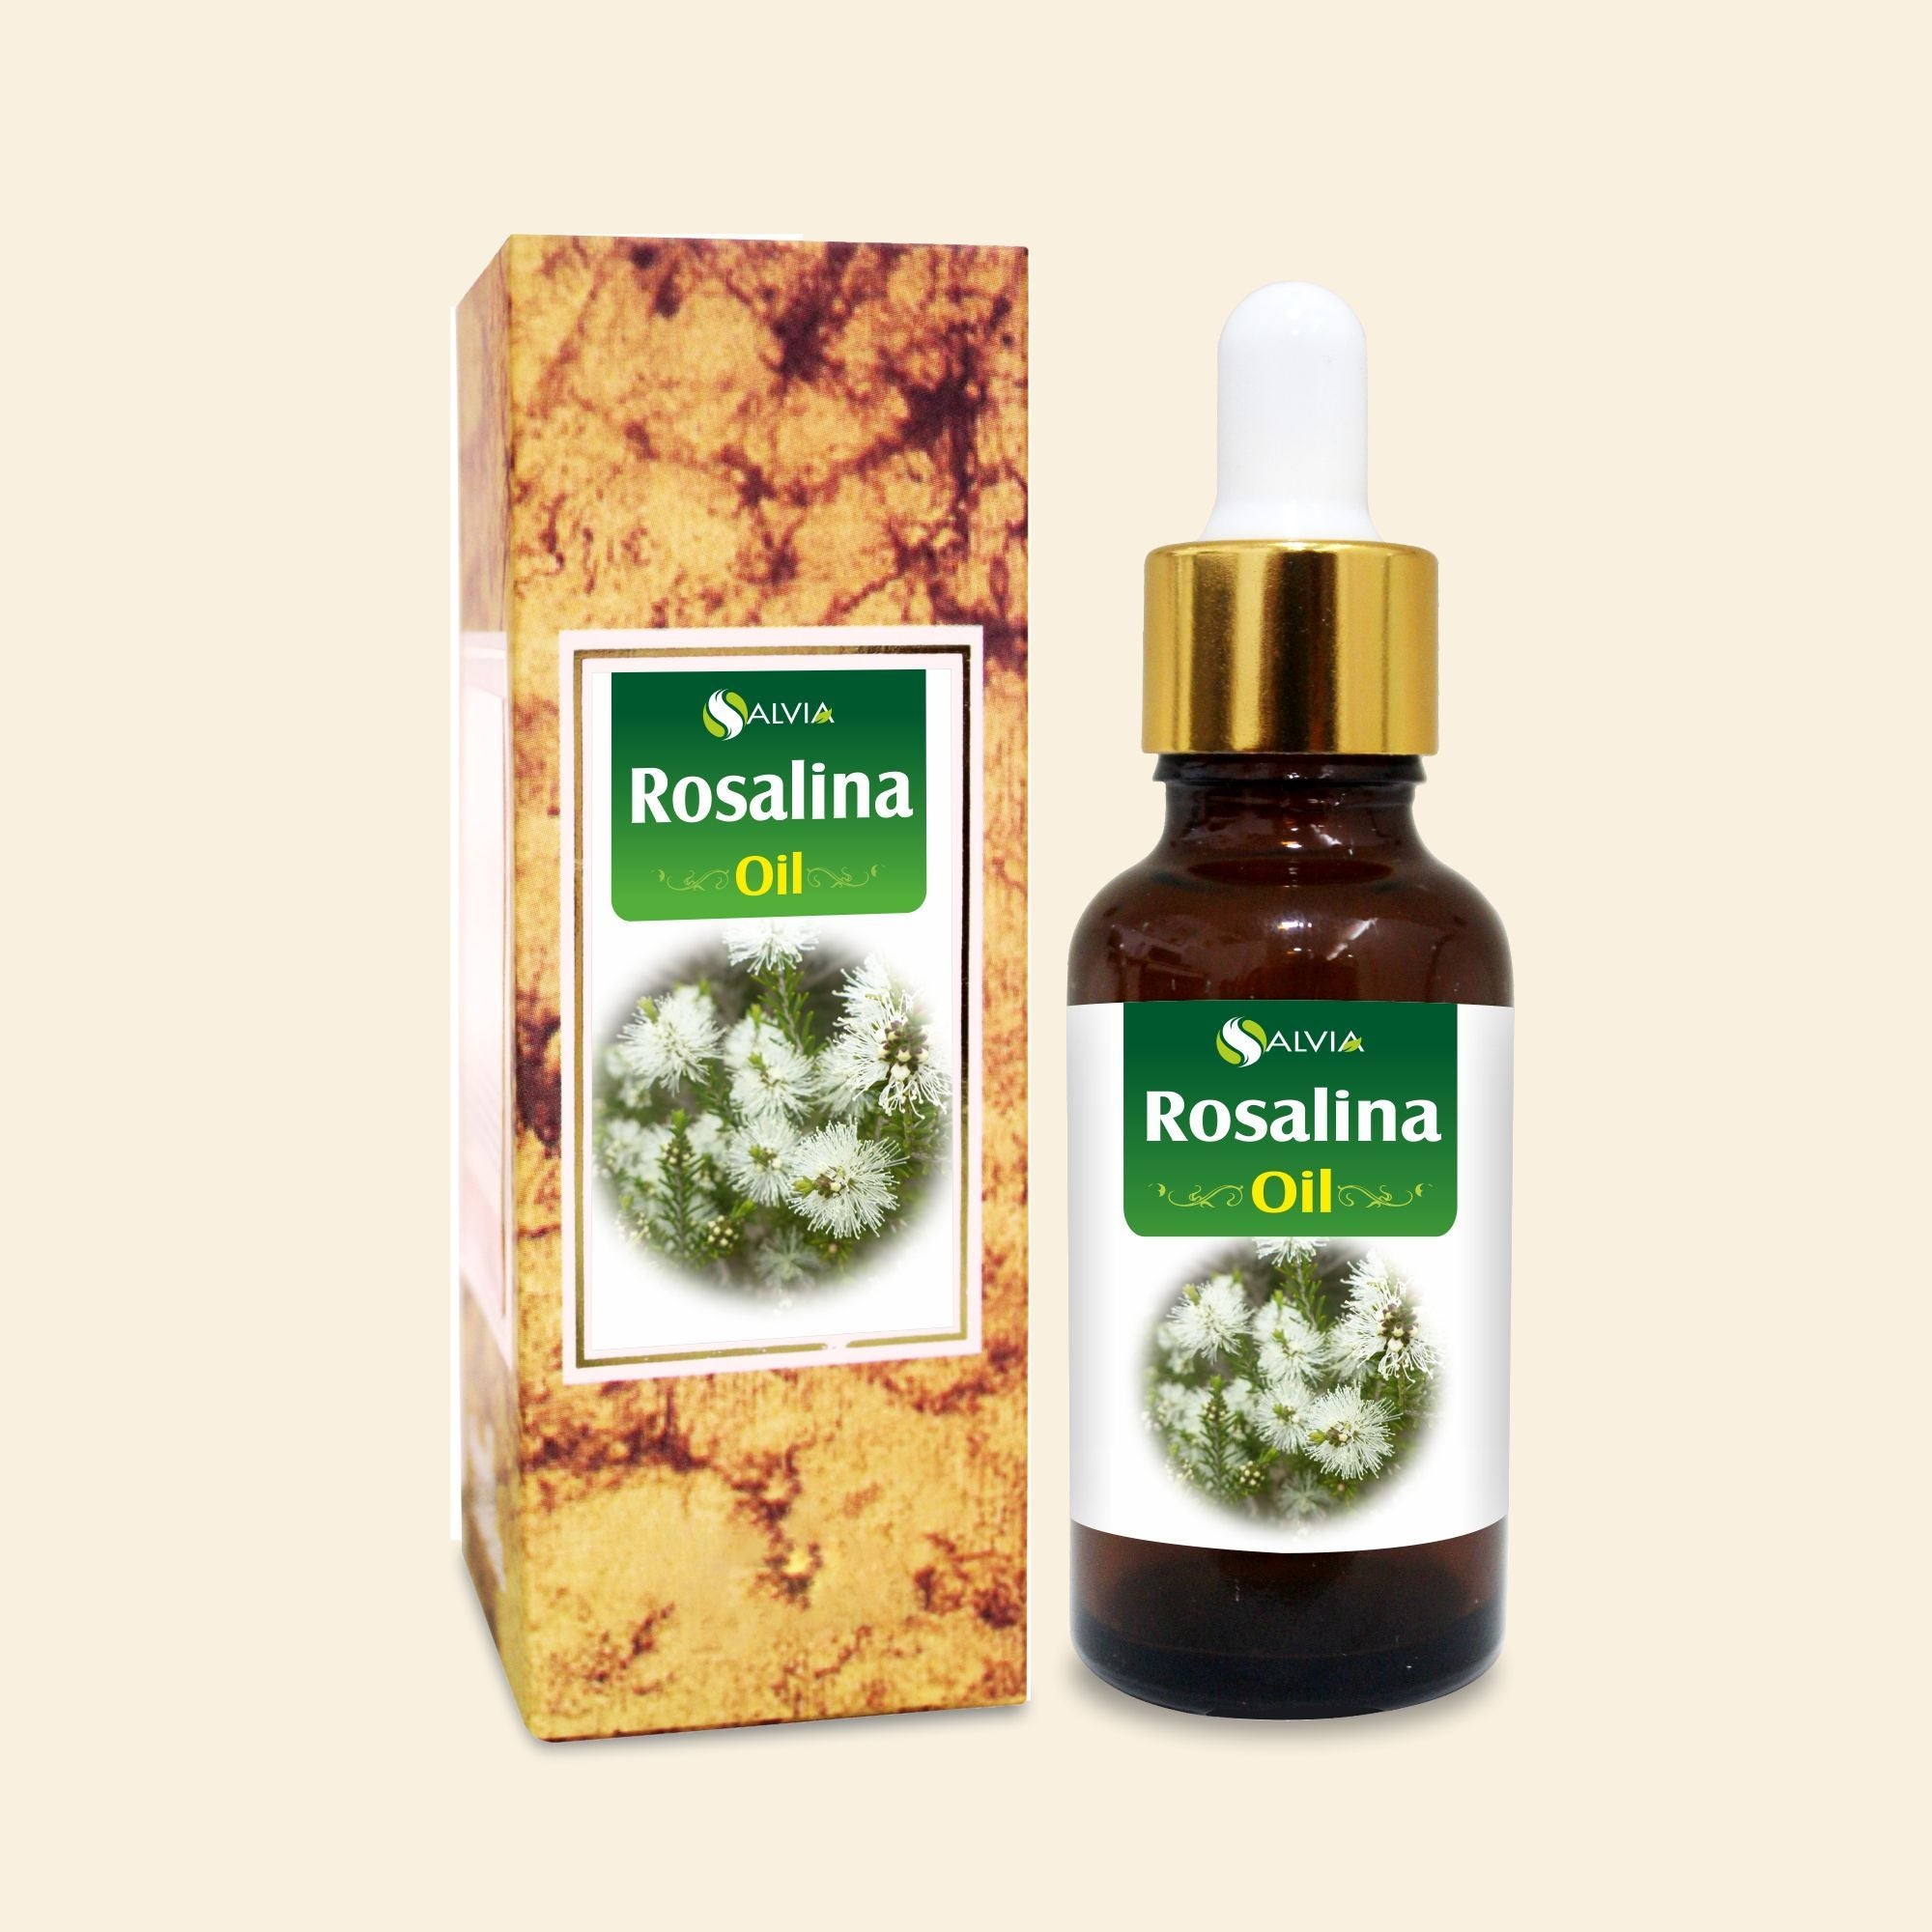 Salvia Natural Essential Oils Rosalina Oil (Melaleuca Ericifolia) Natural Essential Oil